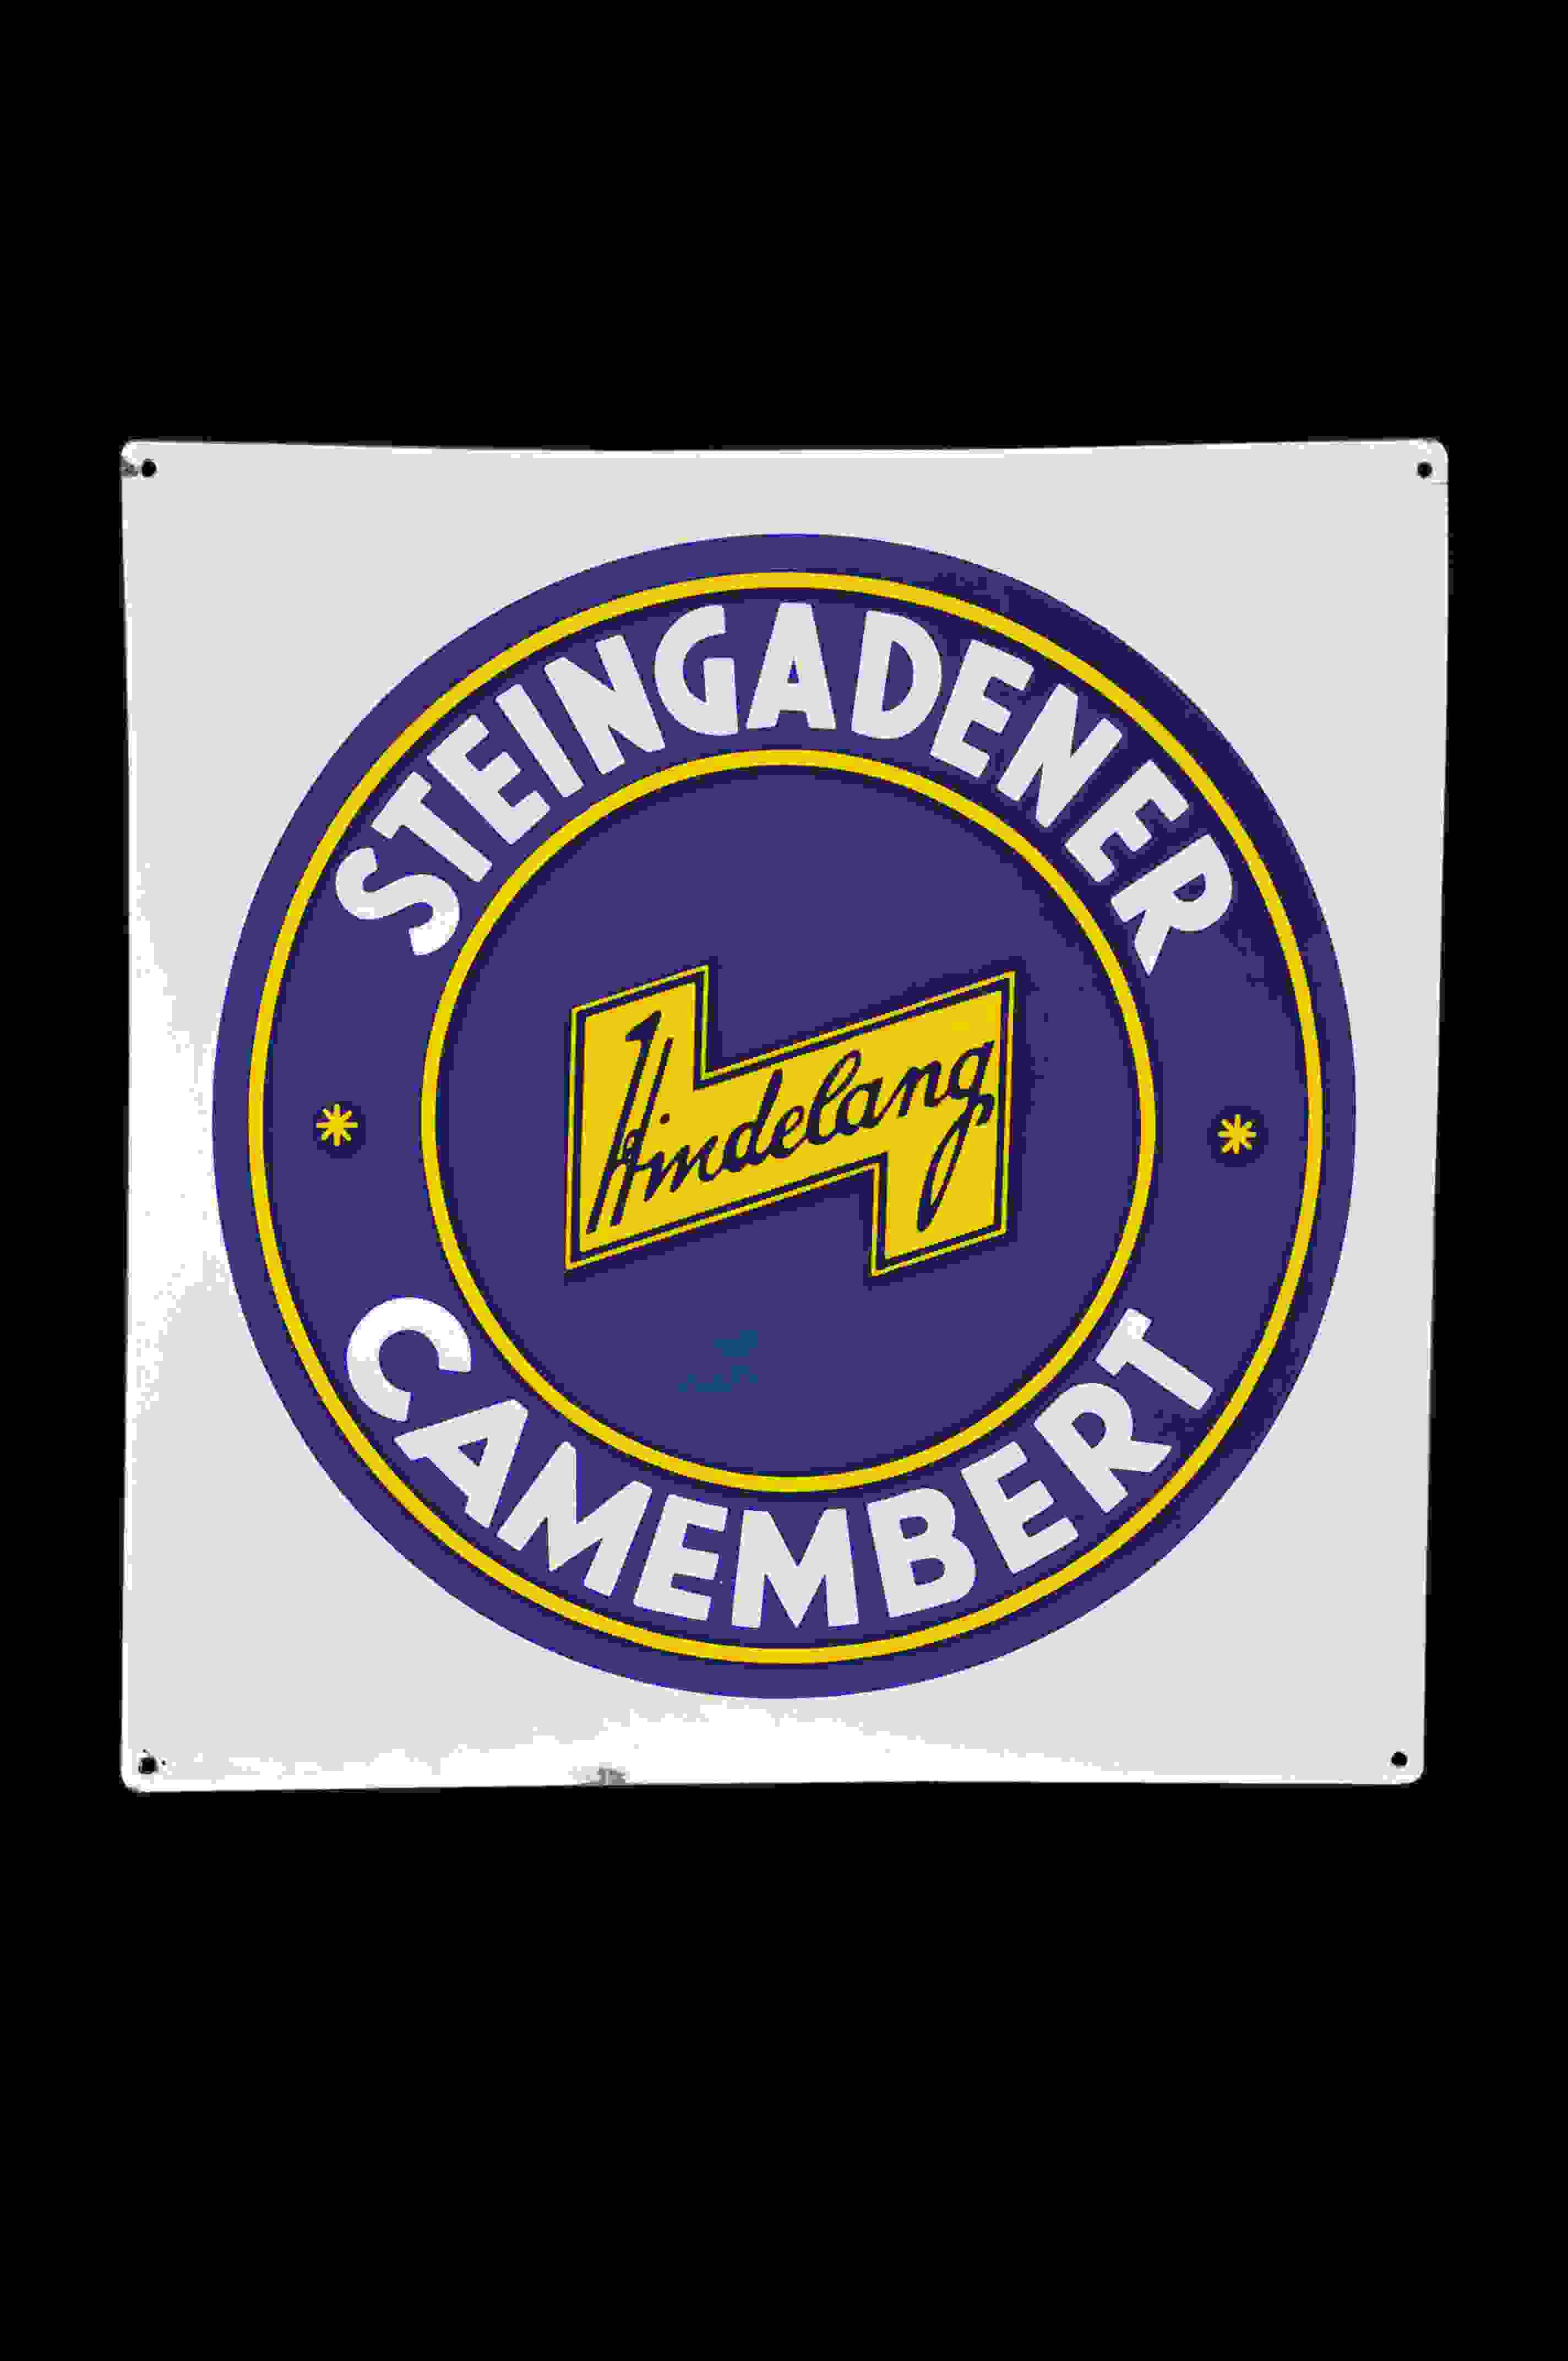 Steingadener Camembert 